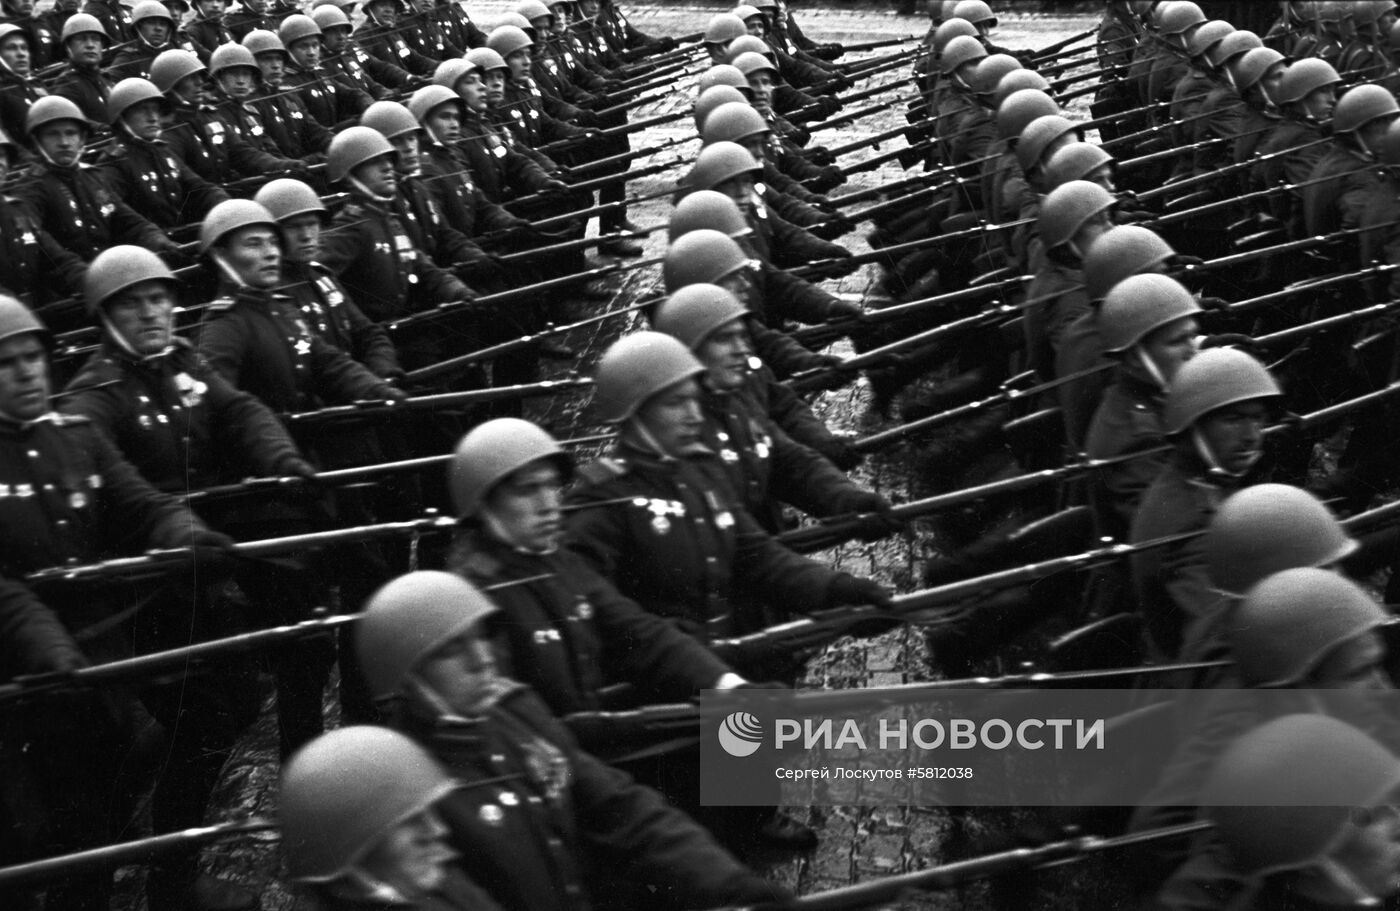 Парад Победы на Красной площади 24 июня 1945 г.